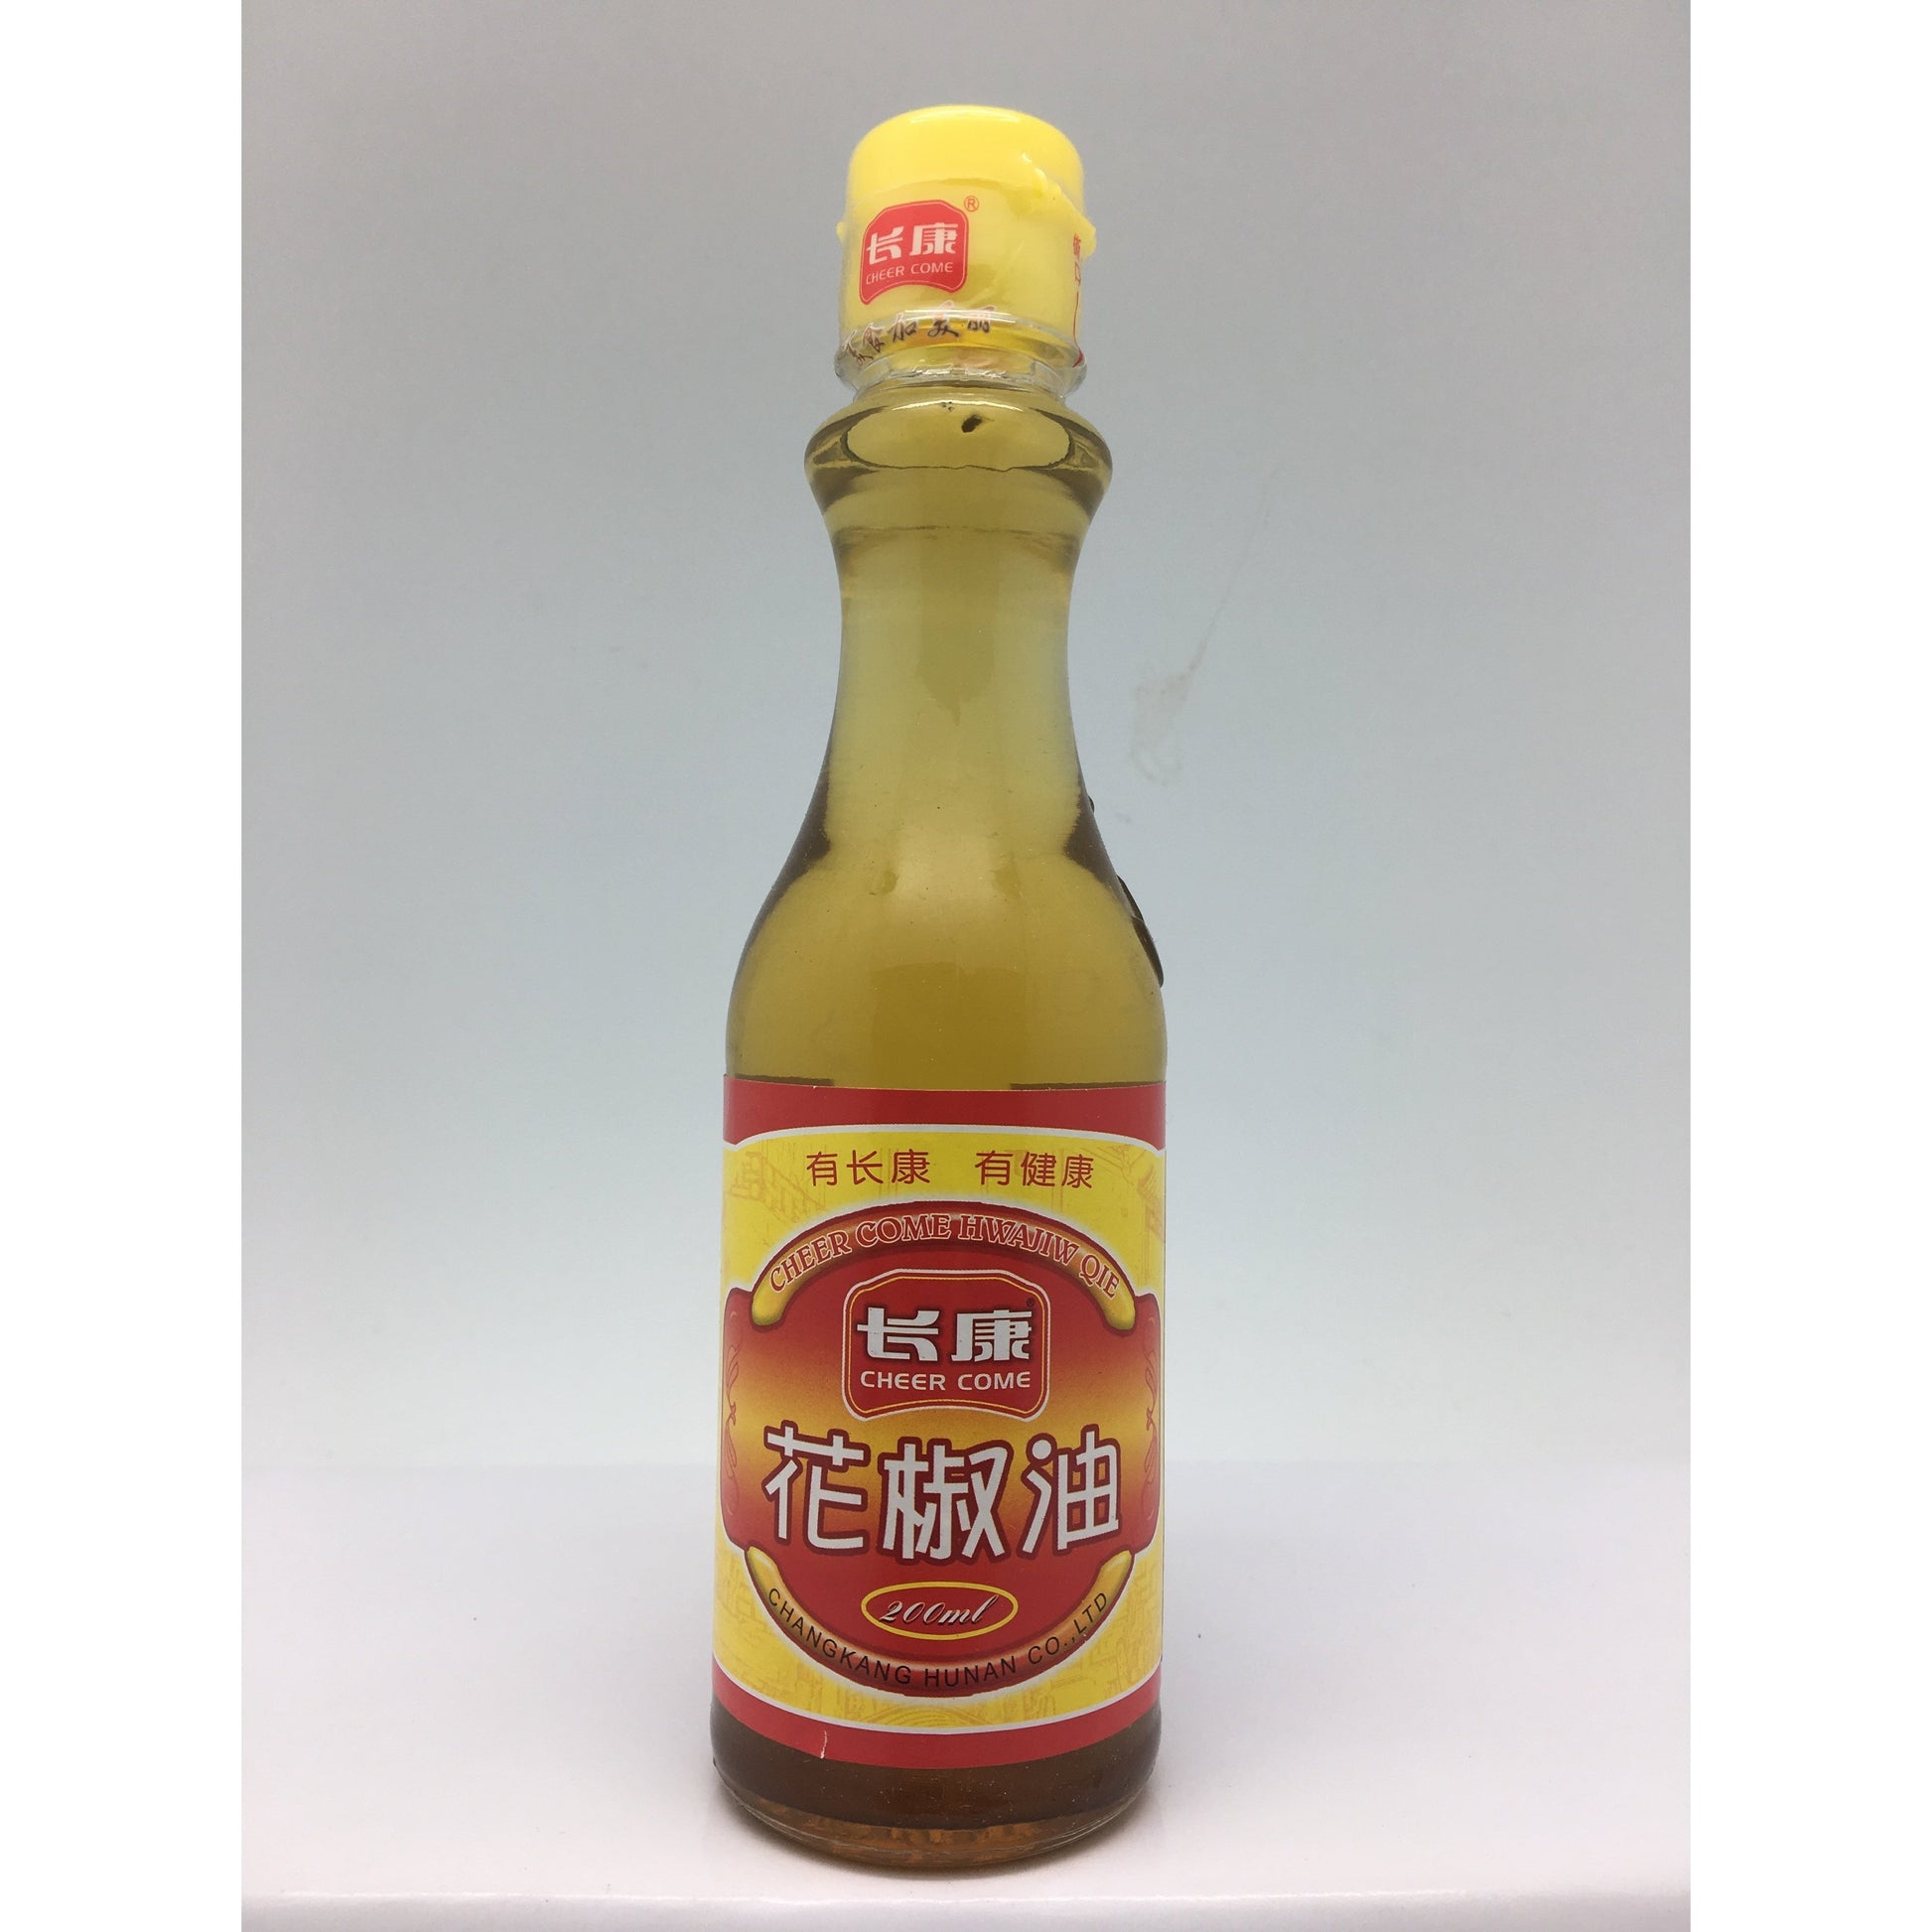 S082P Cheer Come Brand - Pepper Oil 200ml - 20 bot / 1CTN - New Eastland Pty Ltd - Asian food wholesalers